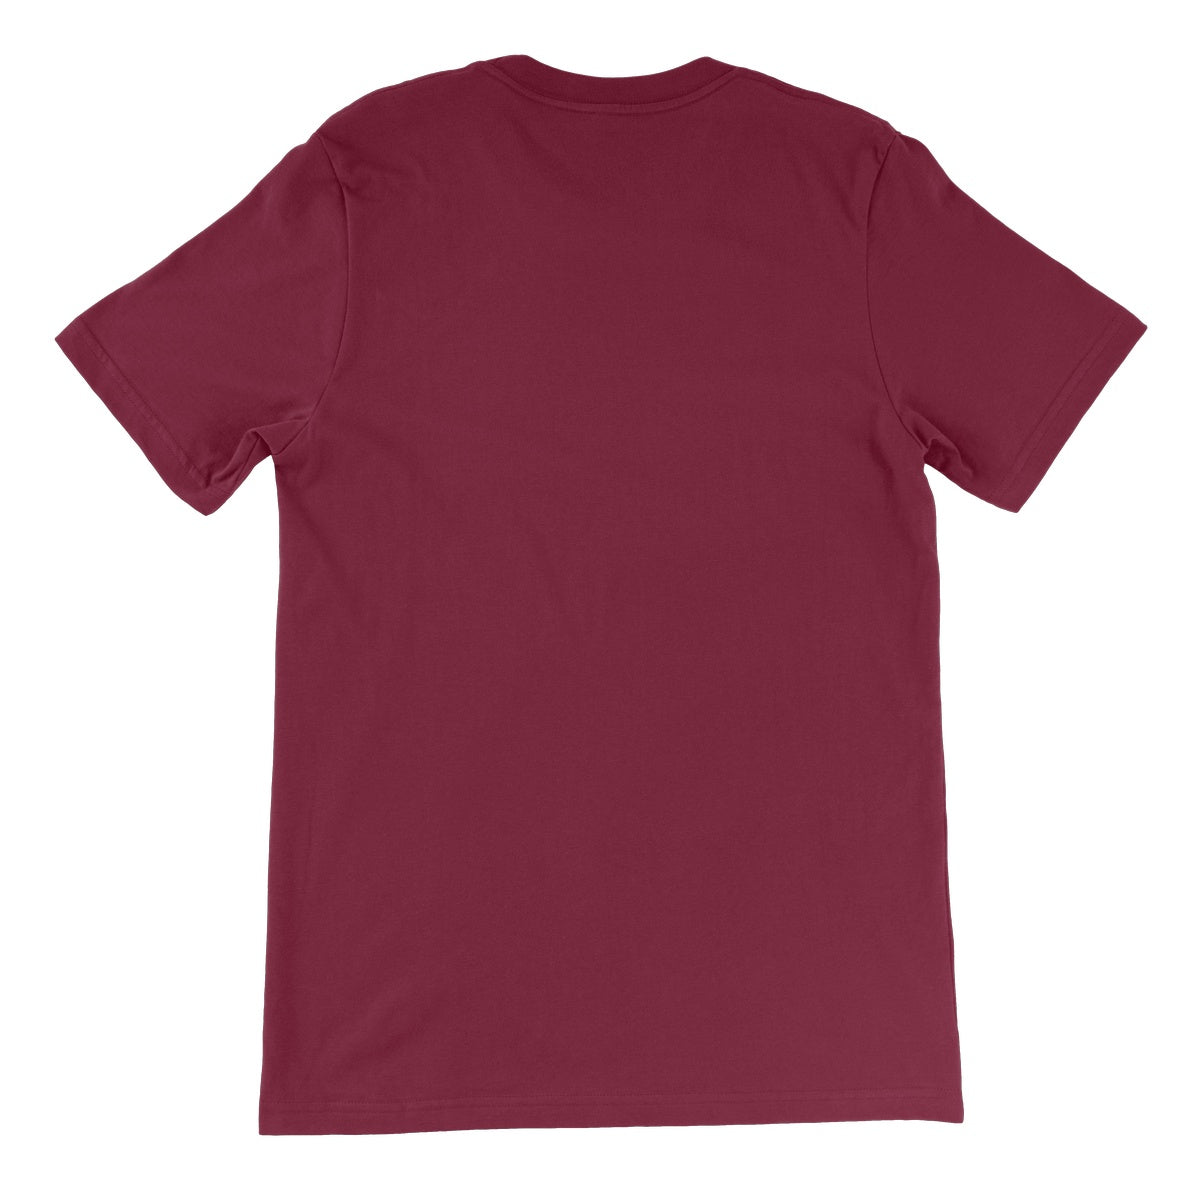 Chuck Illustrated Tee Unisex Short Sleeve T-Shirt